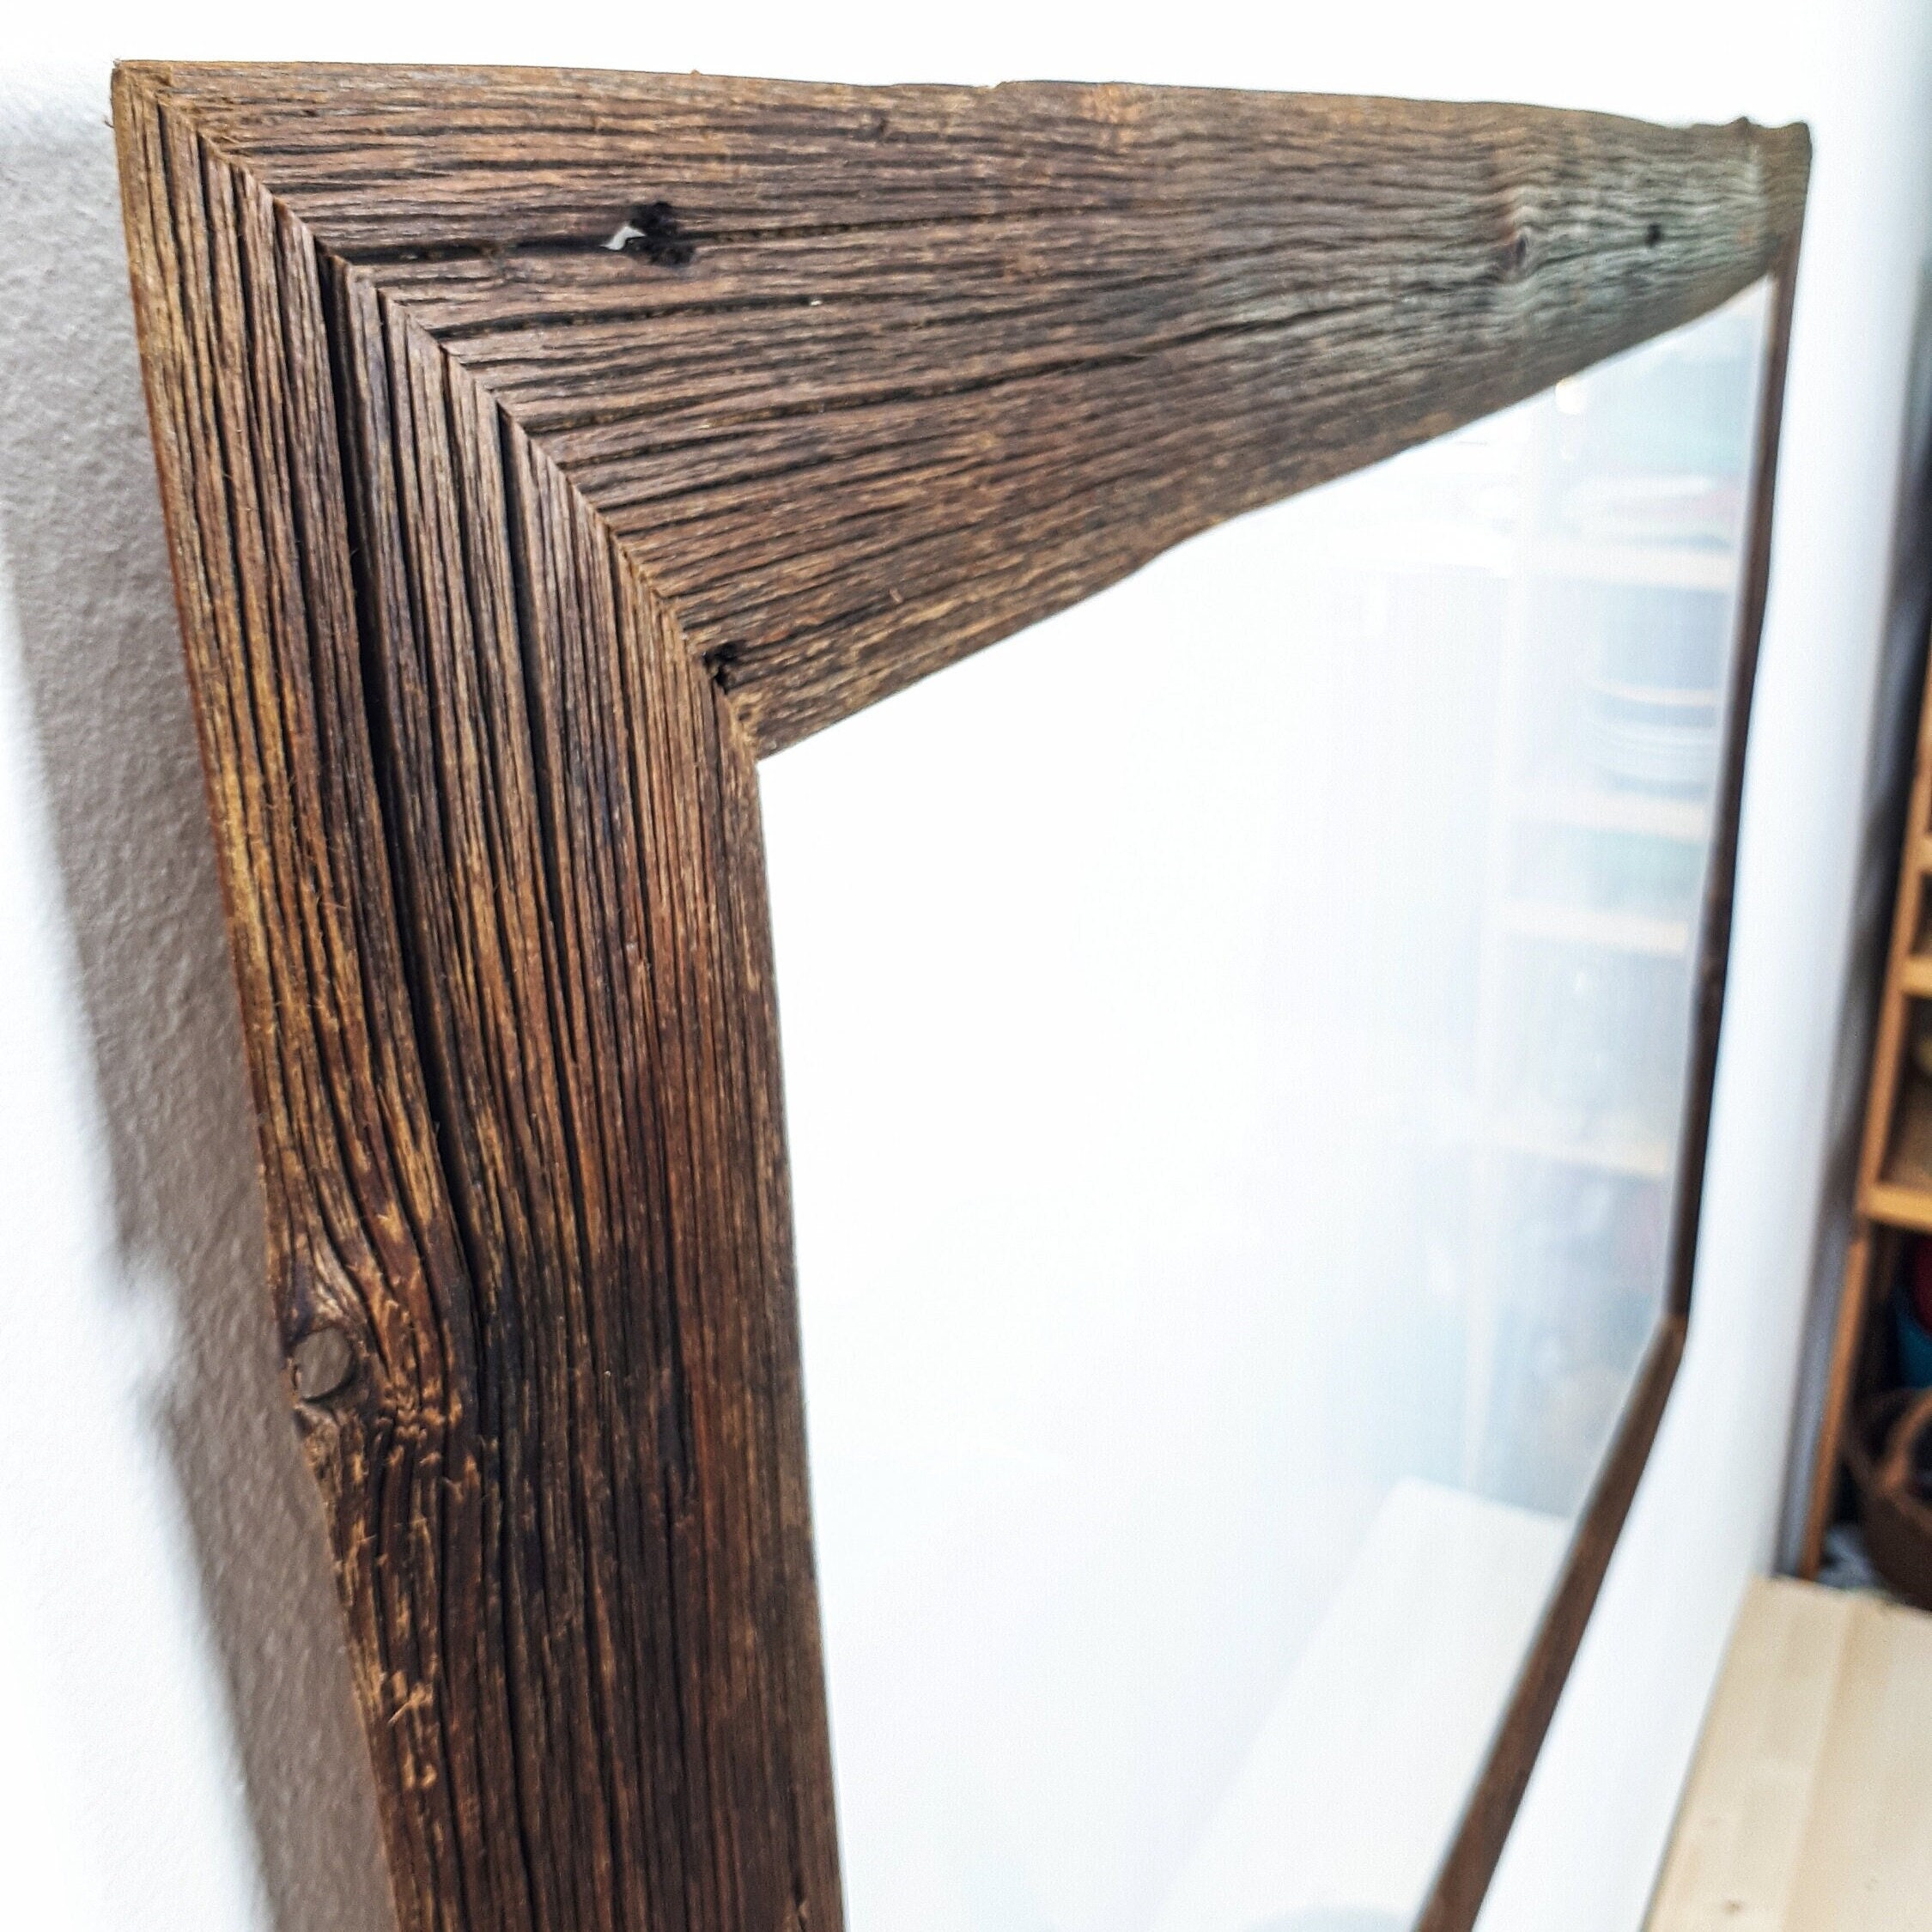 Rustic Frame - 24x30 distressed barn wood frame, metal corner brackets